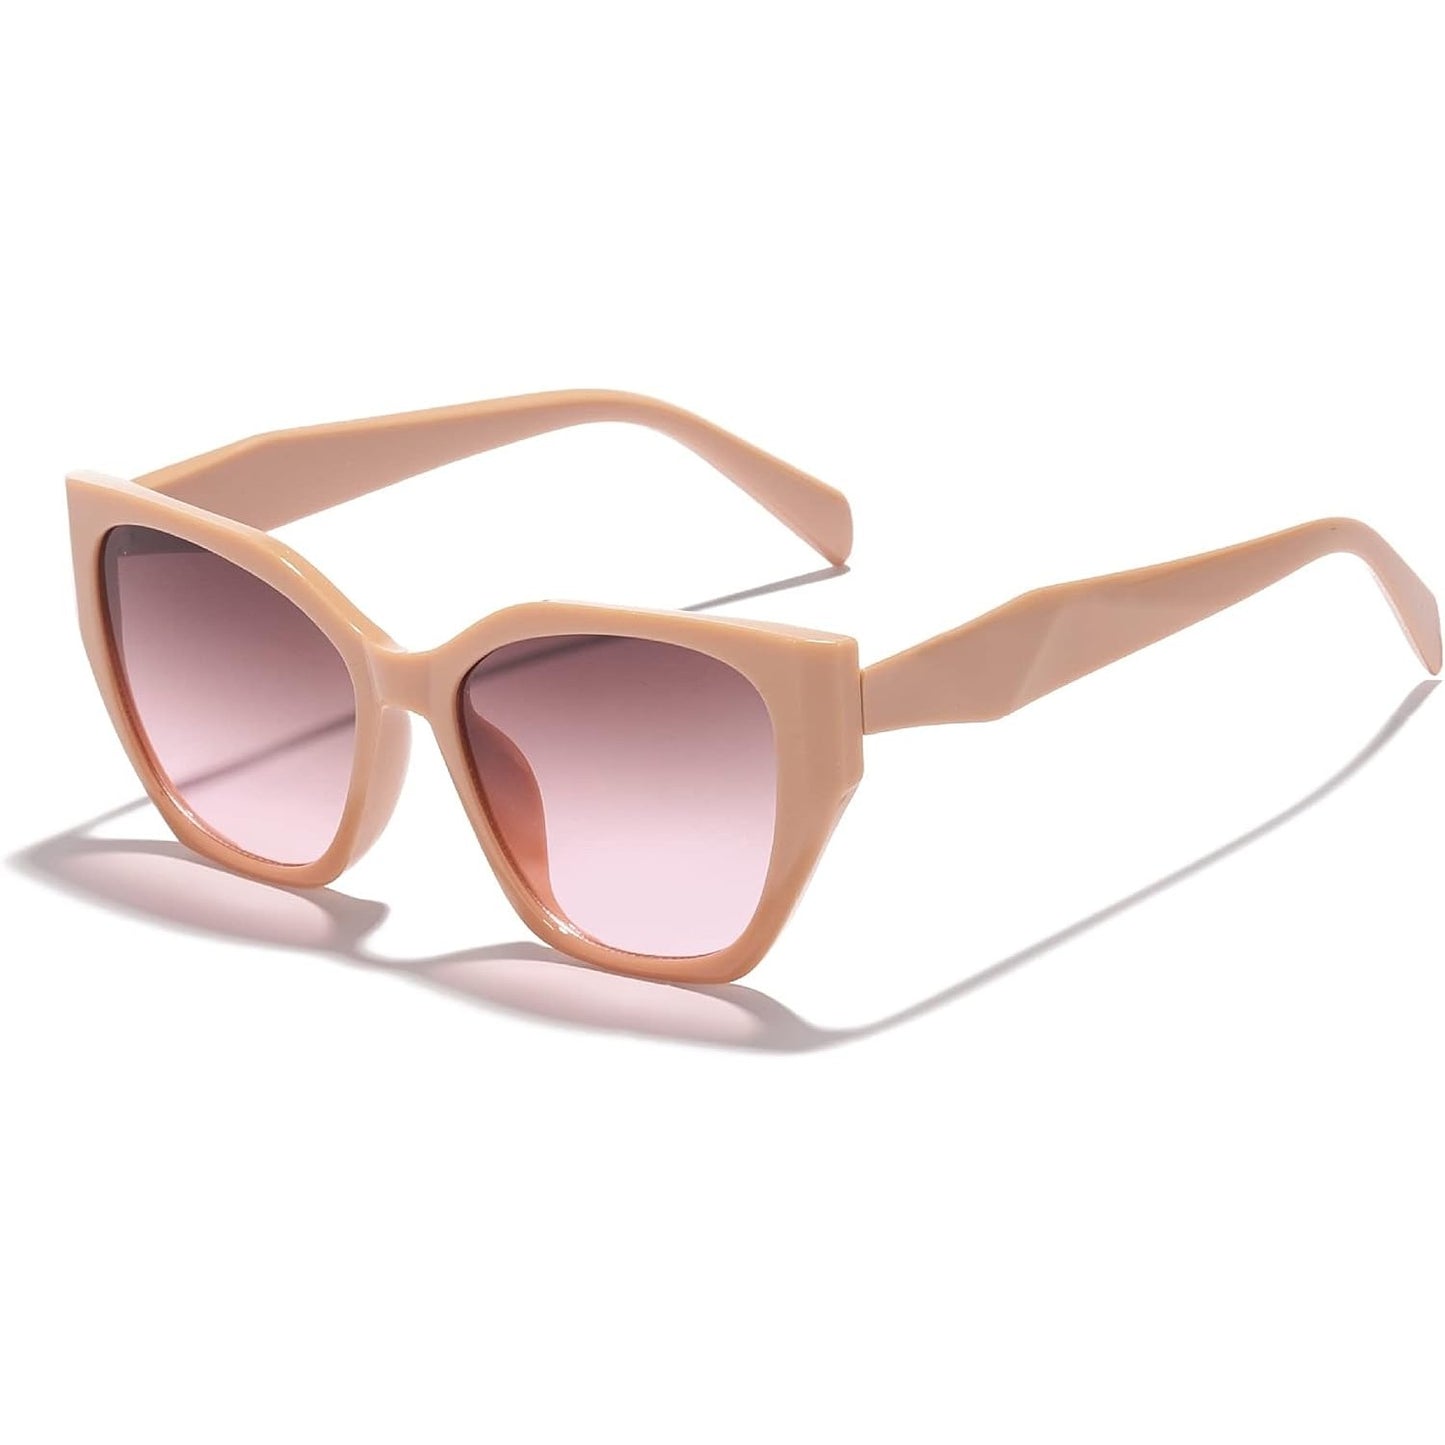 ChromaGlance Men's and Women's Sunglasses Outdoor Vacation Beach Glasses Cream